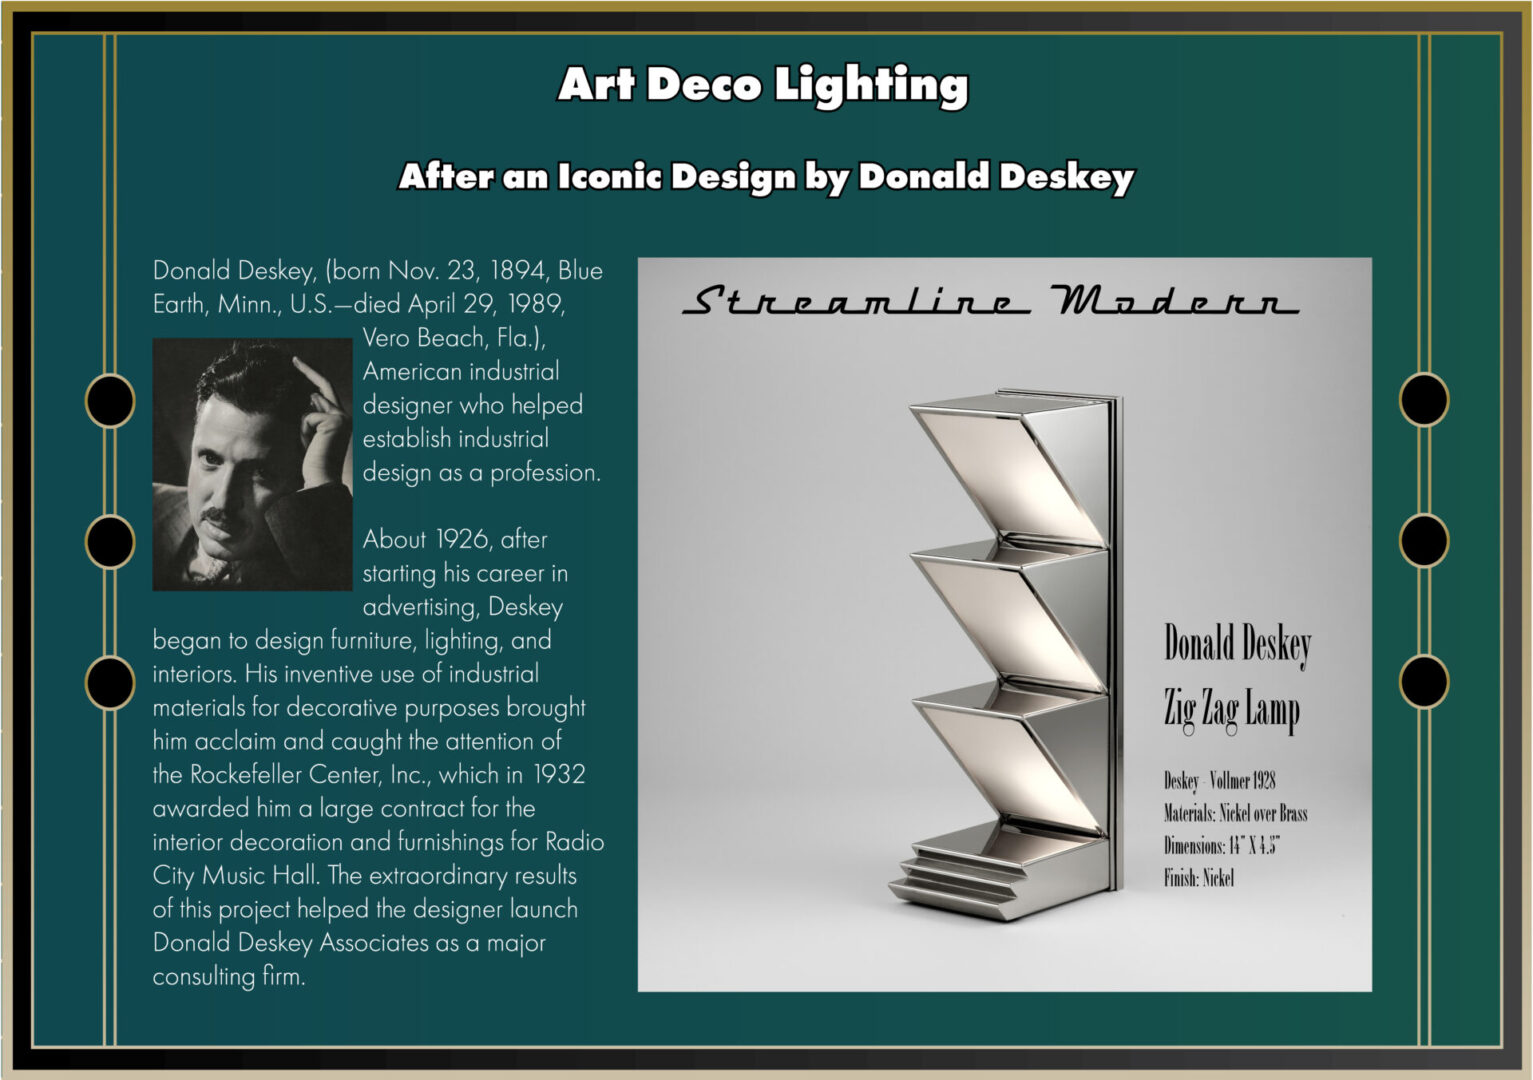 Iconic Art Deco Lighting Design by Donald Deskey